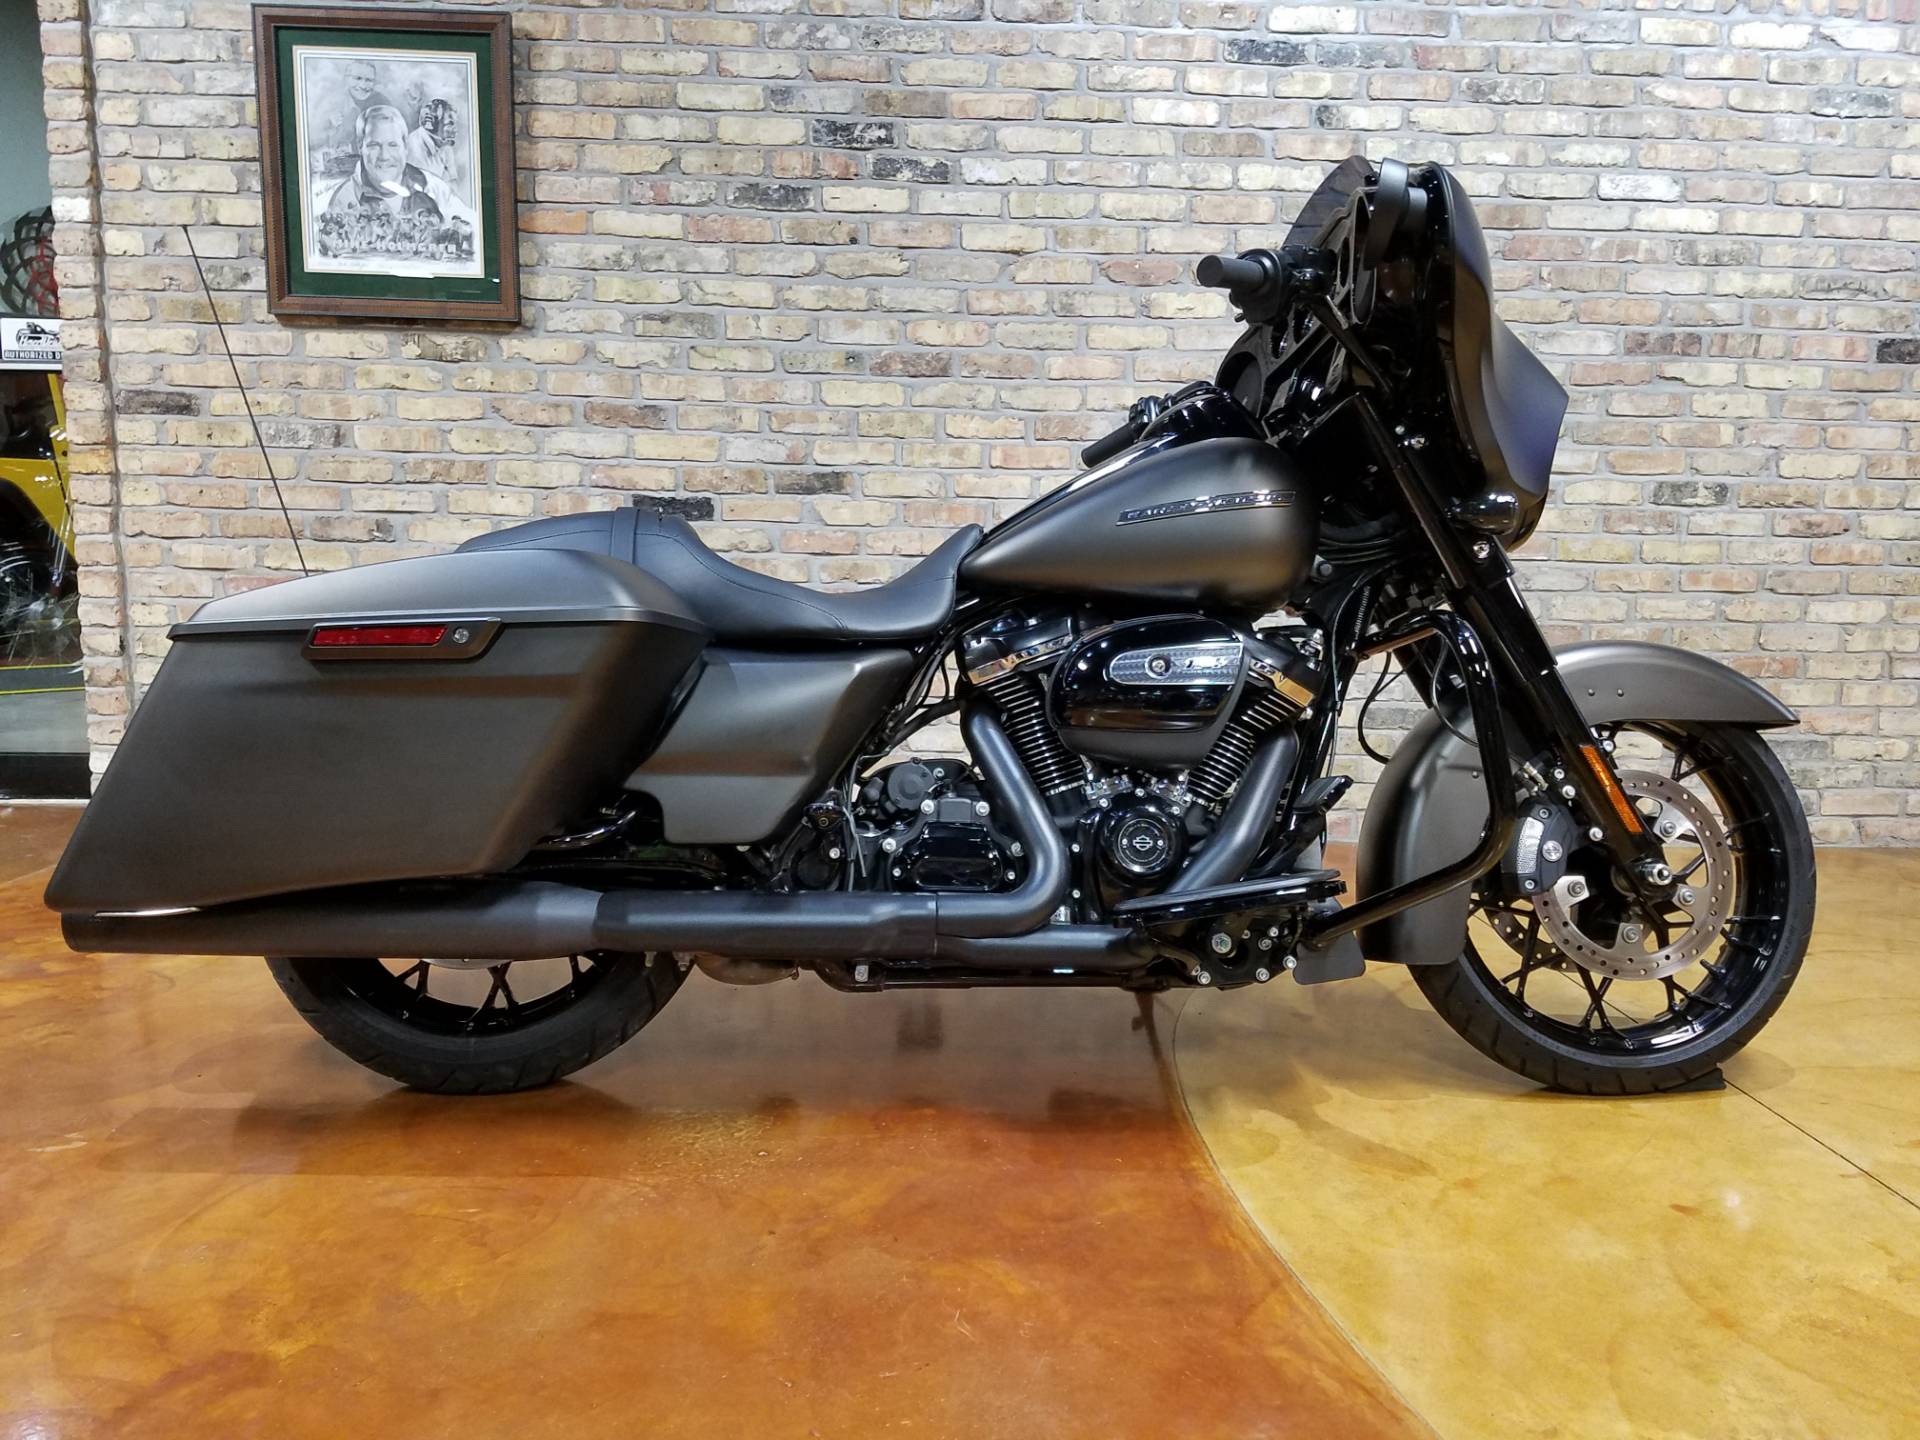 Used 2020 Harley Davidson Street Glide Special Motorcycles In Big Bend Wi 4361 River Rock Gray Denim